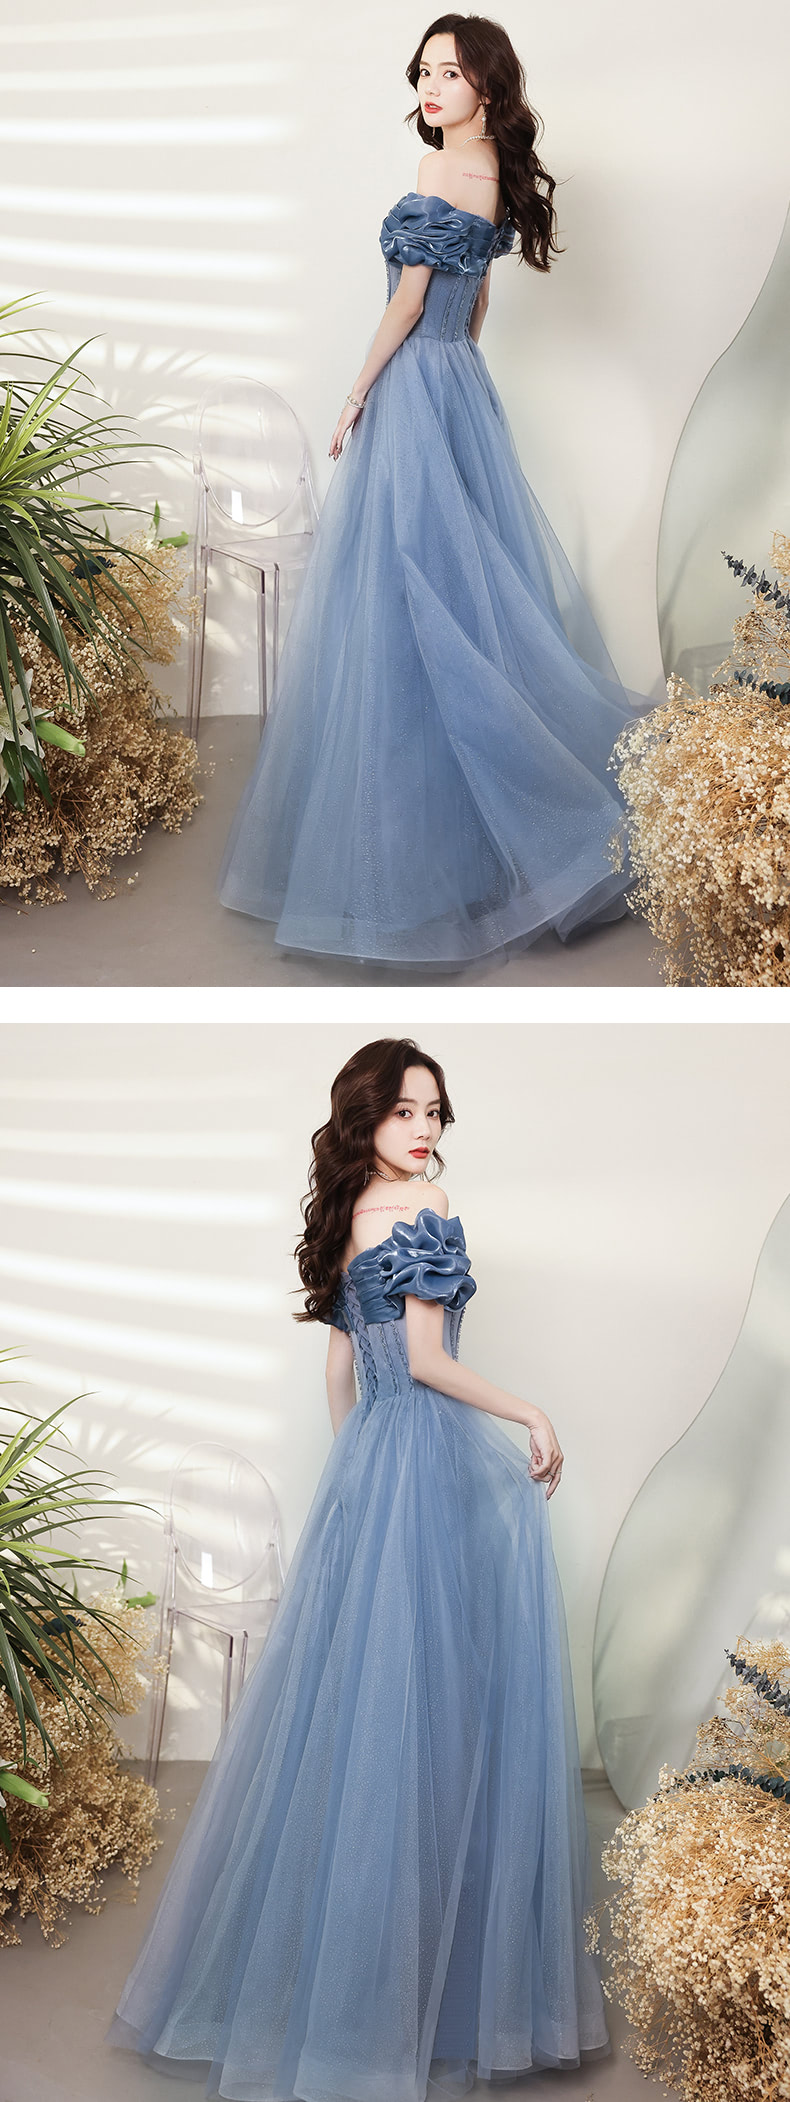 Simple-Sexy-Off-Shoulder-Blue-Satin-Prom-Evening-Long-Dress14.jpg